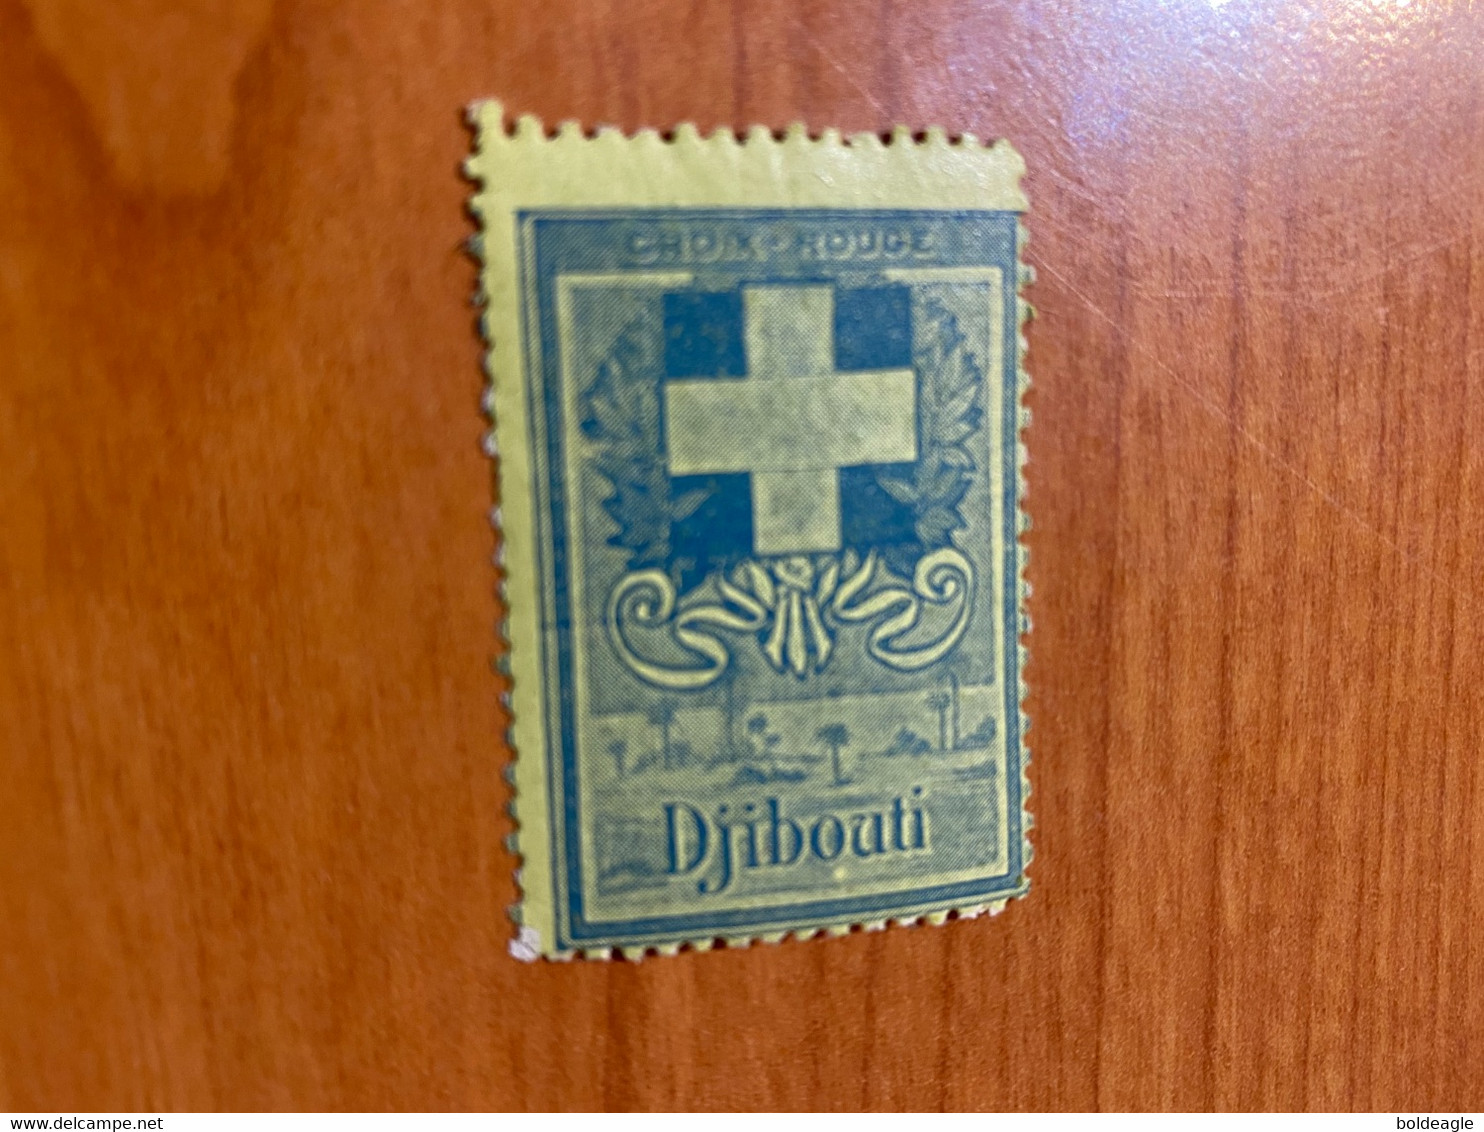 Vignette - Djibouti - Croix Rouge /militaire - Red Cross